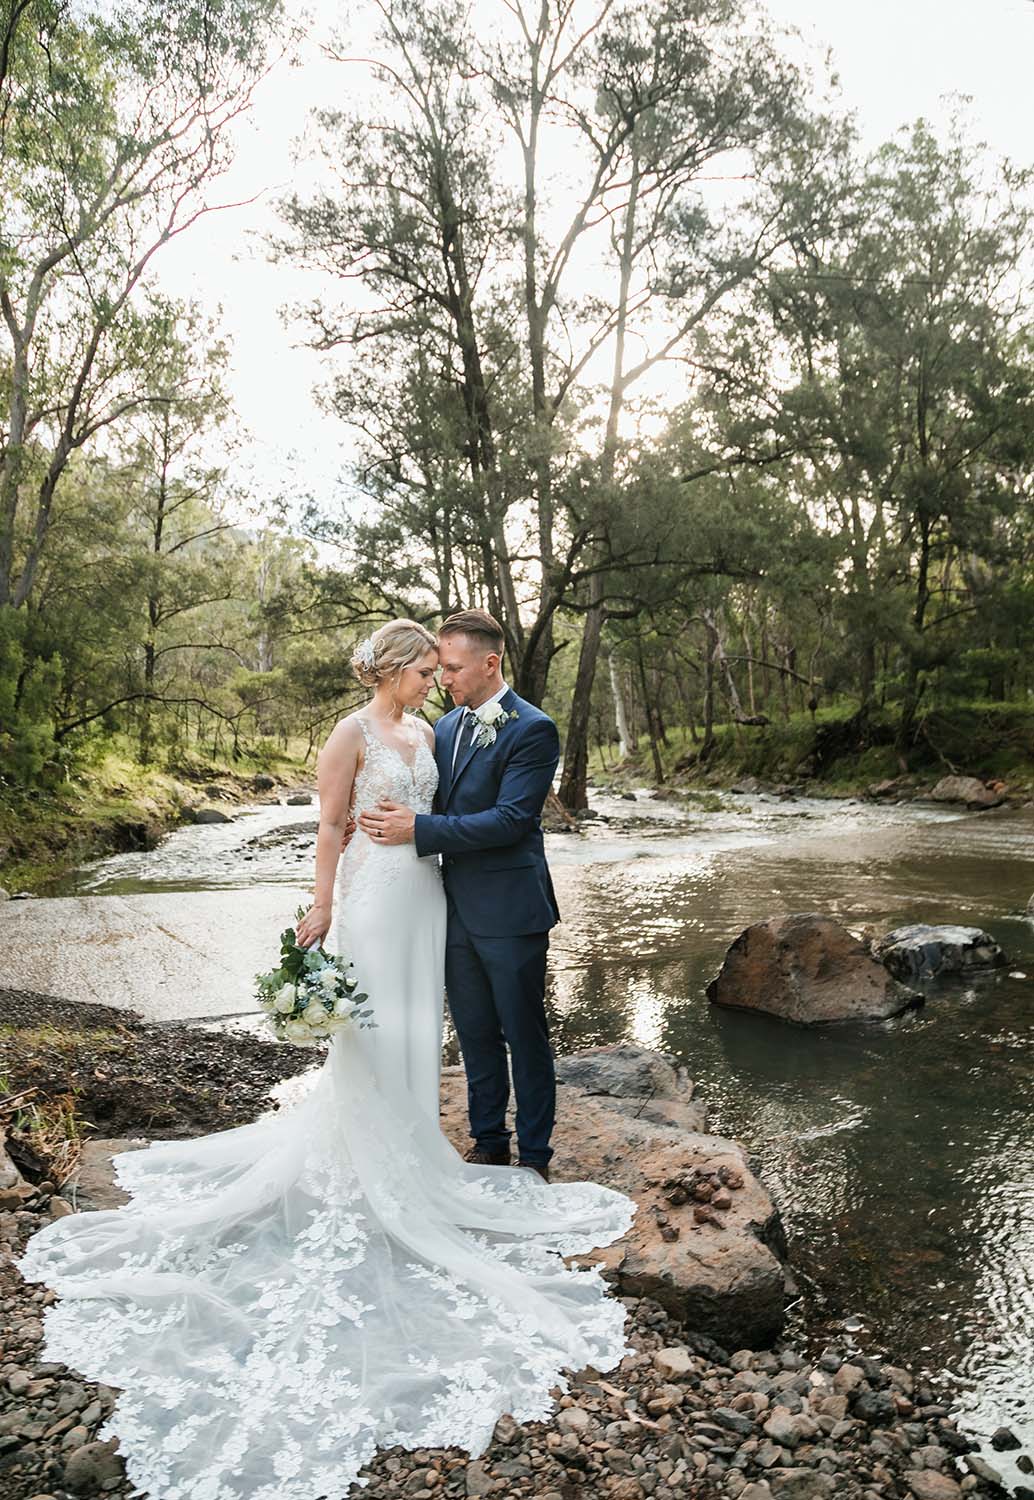 Wedding Photography - couple embracing near stream